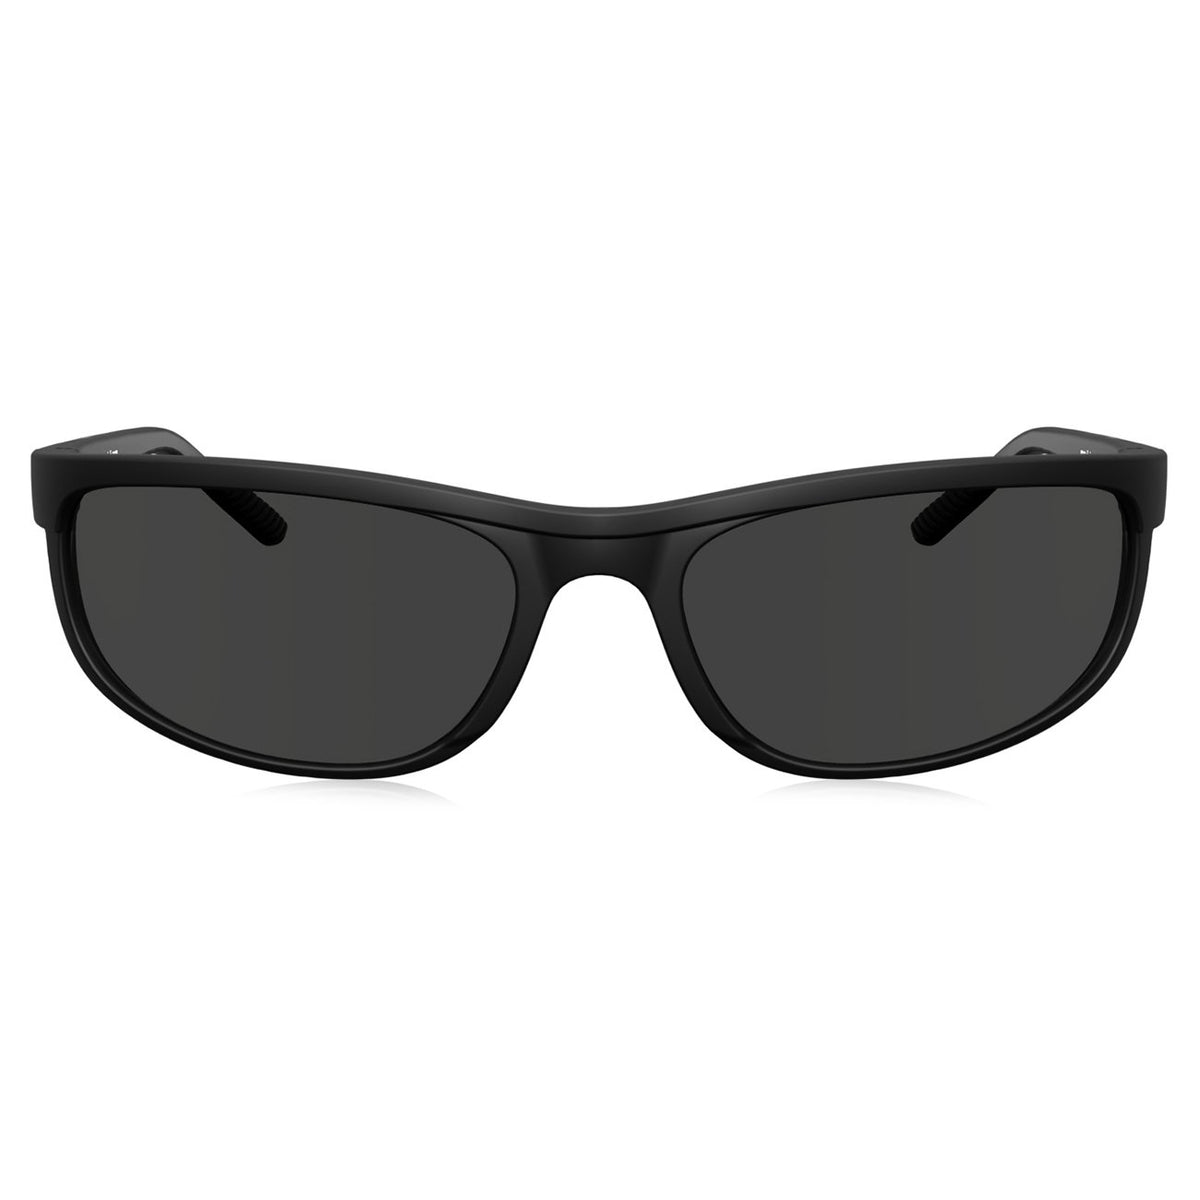 Maxjuli Polarized Sunglasses Men Women Uv400 Protection Rectangular Sun Glasses 8807 Maxjuli